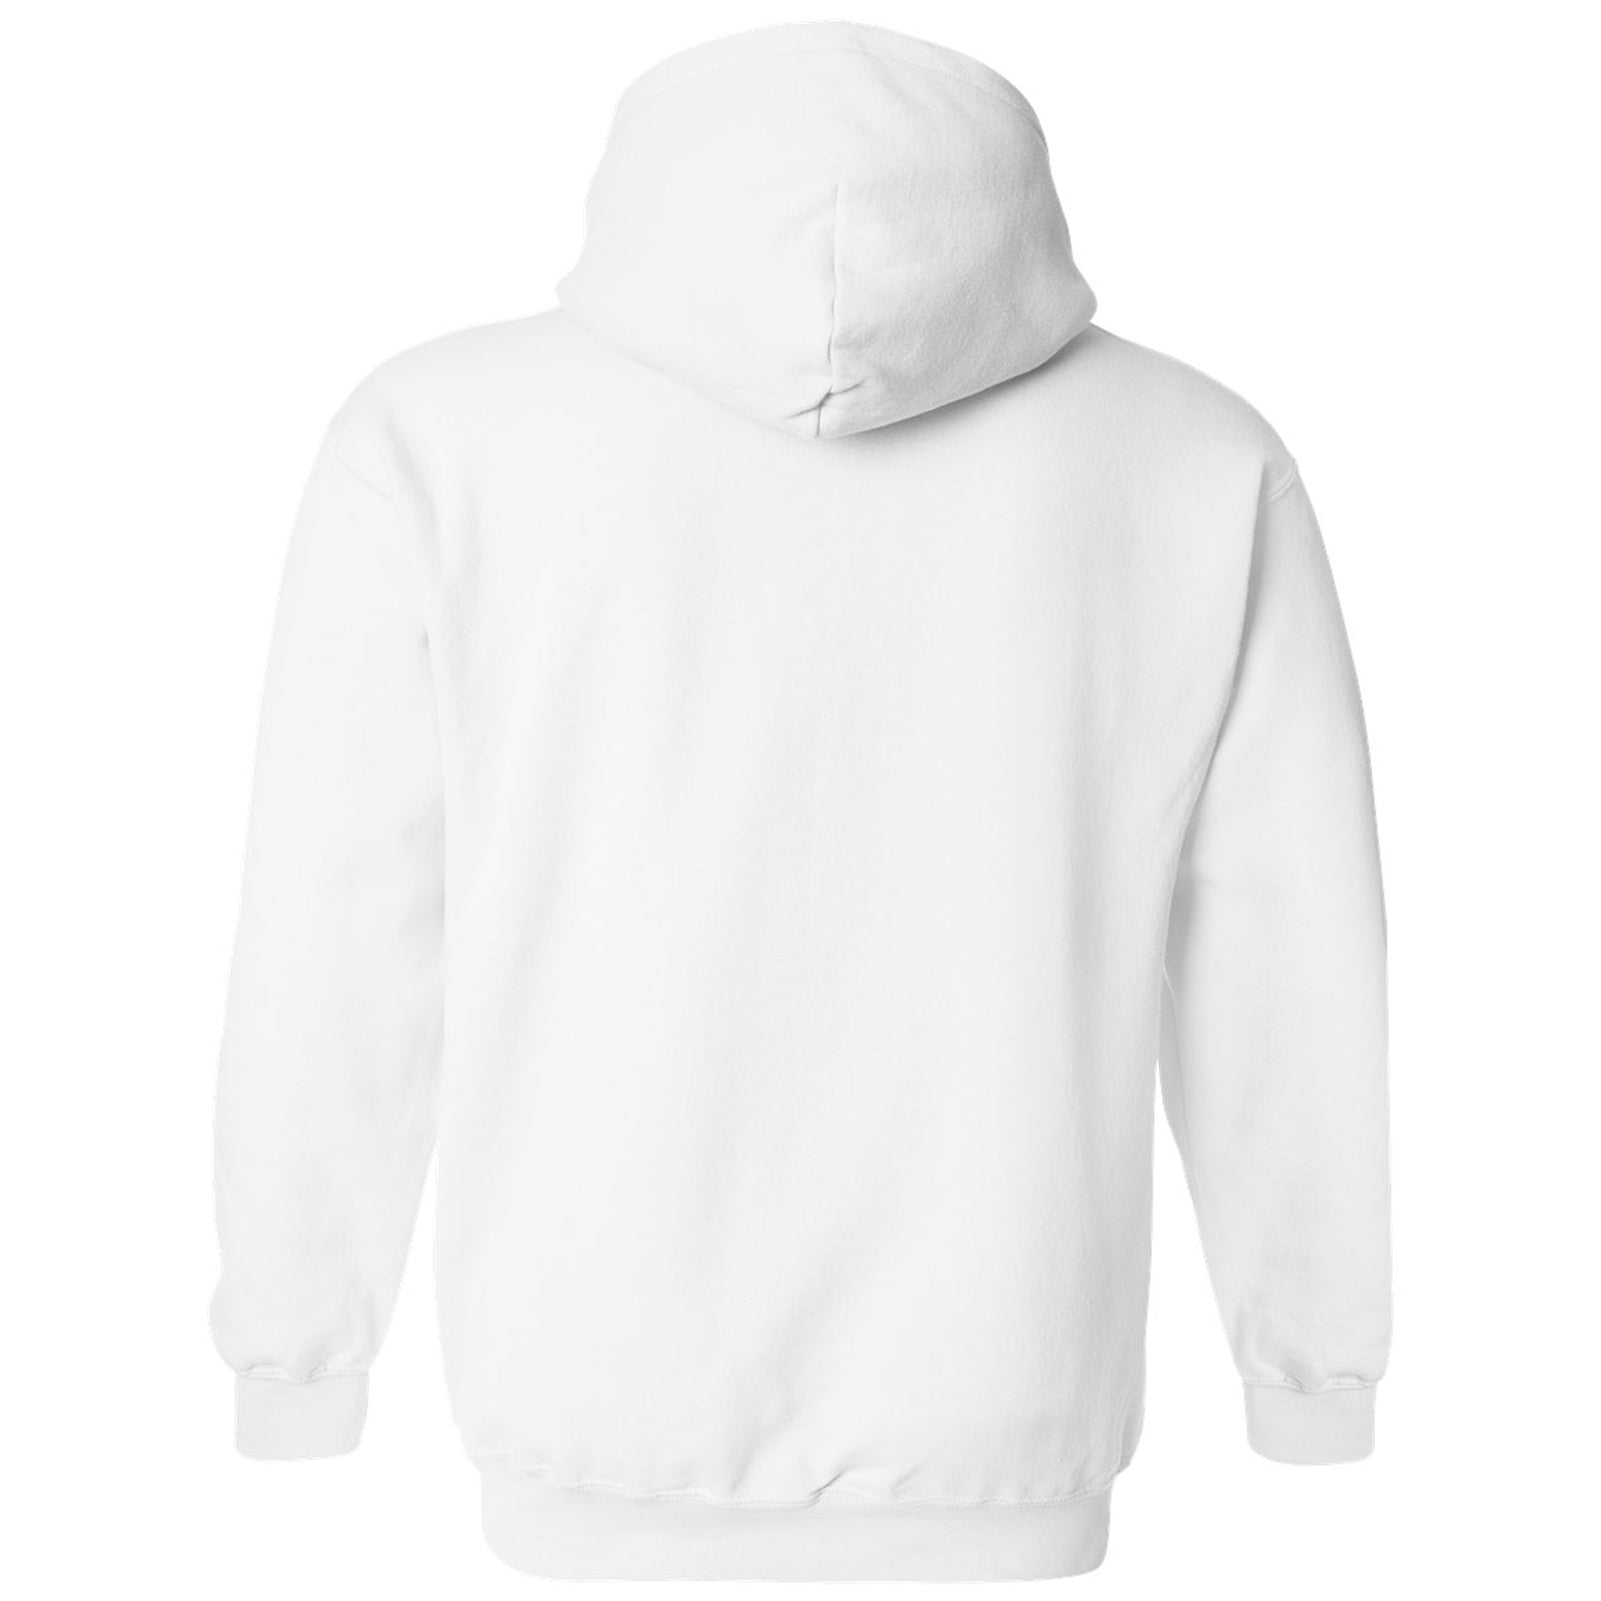 next hoodies womens